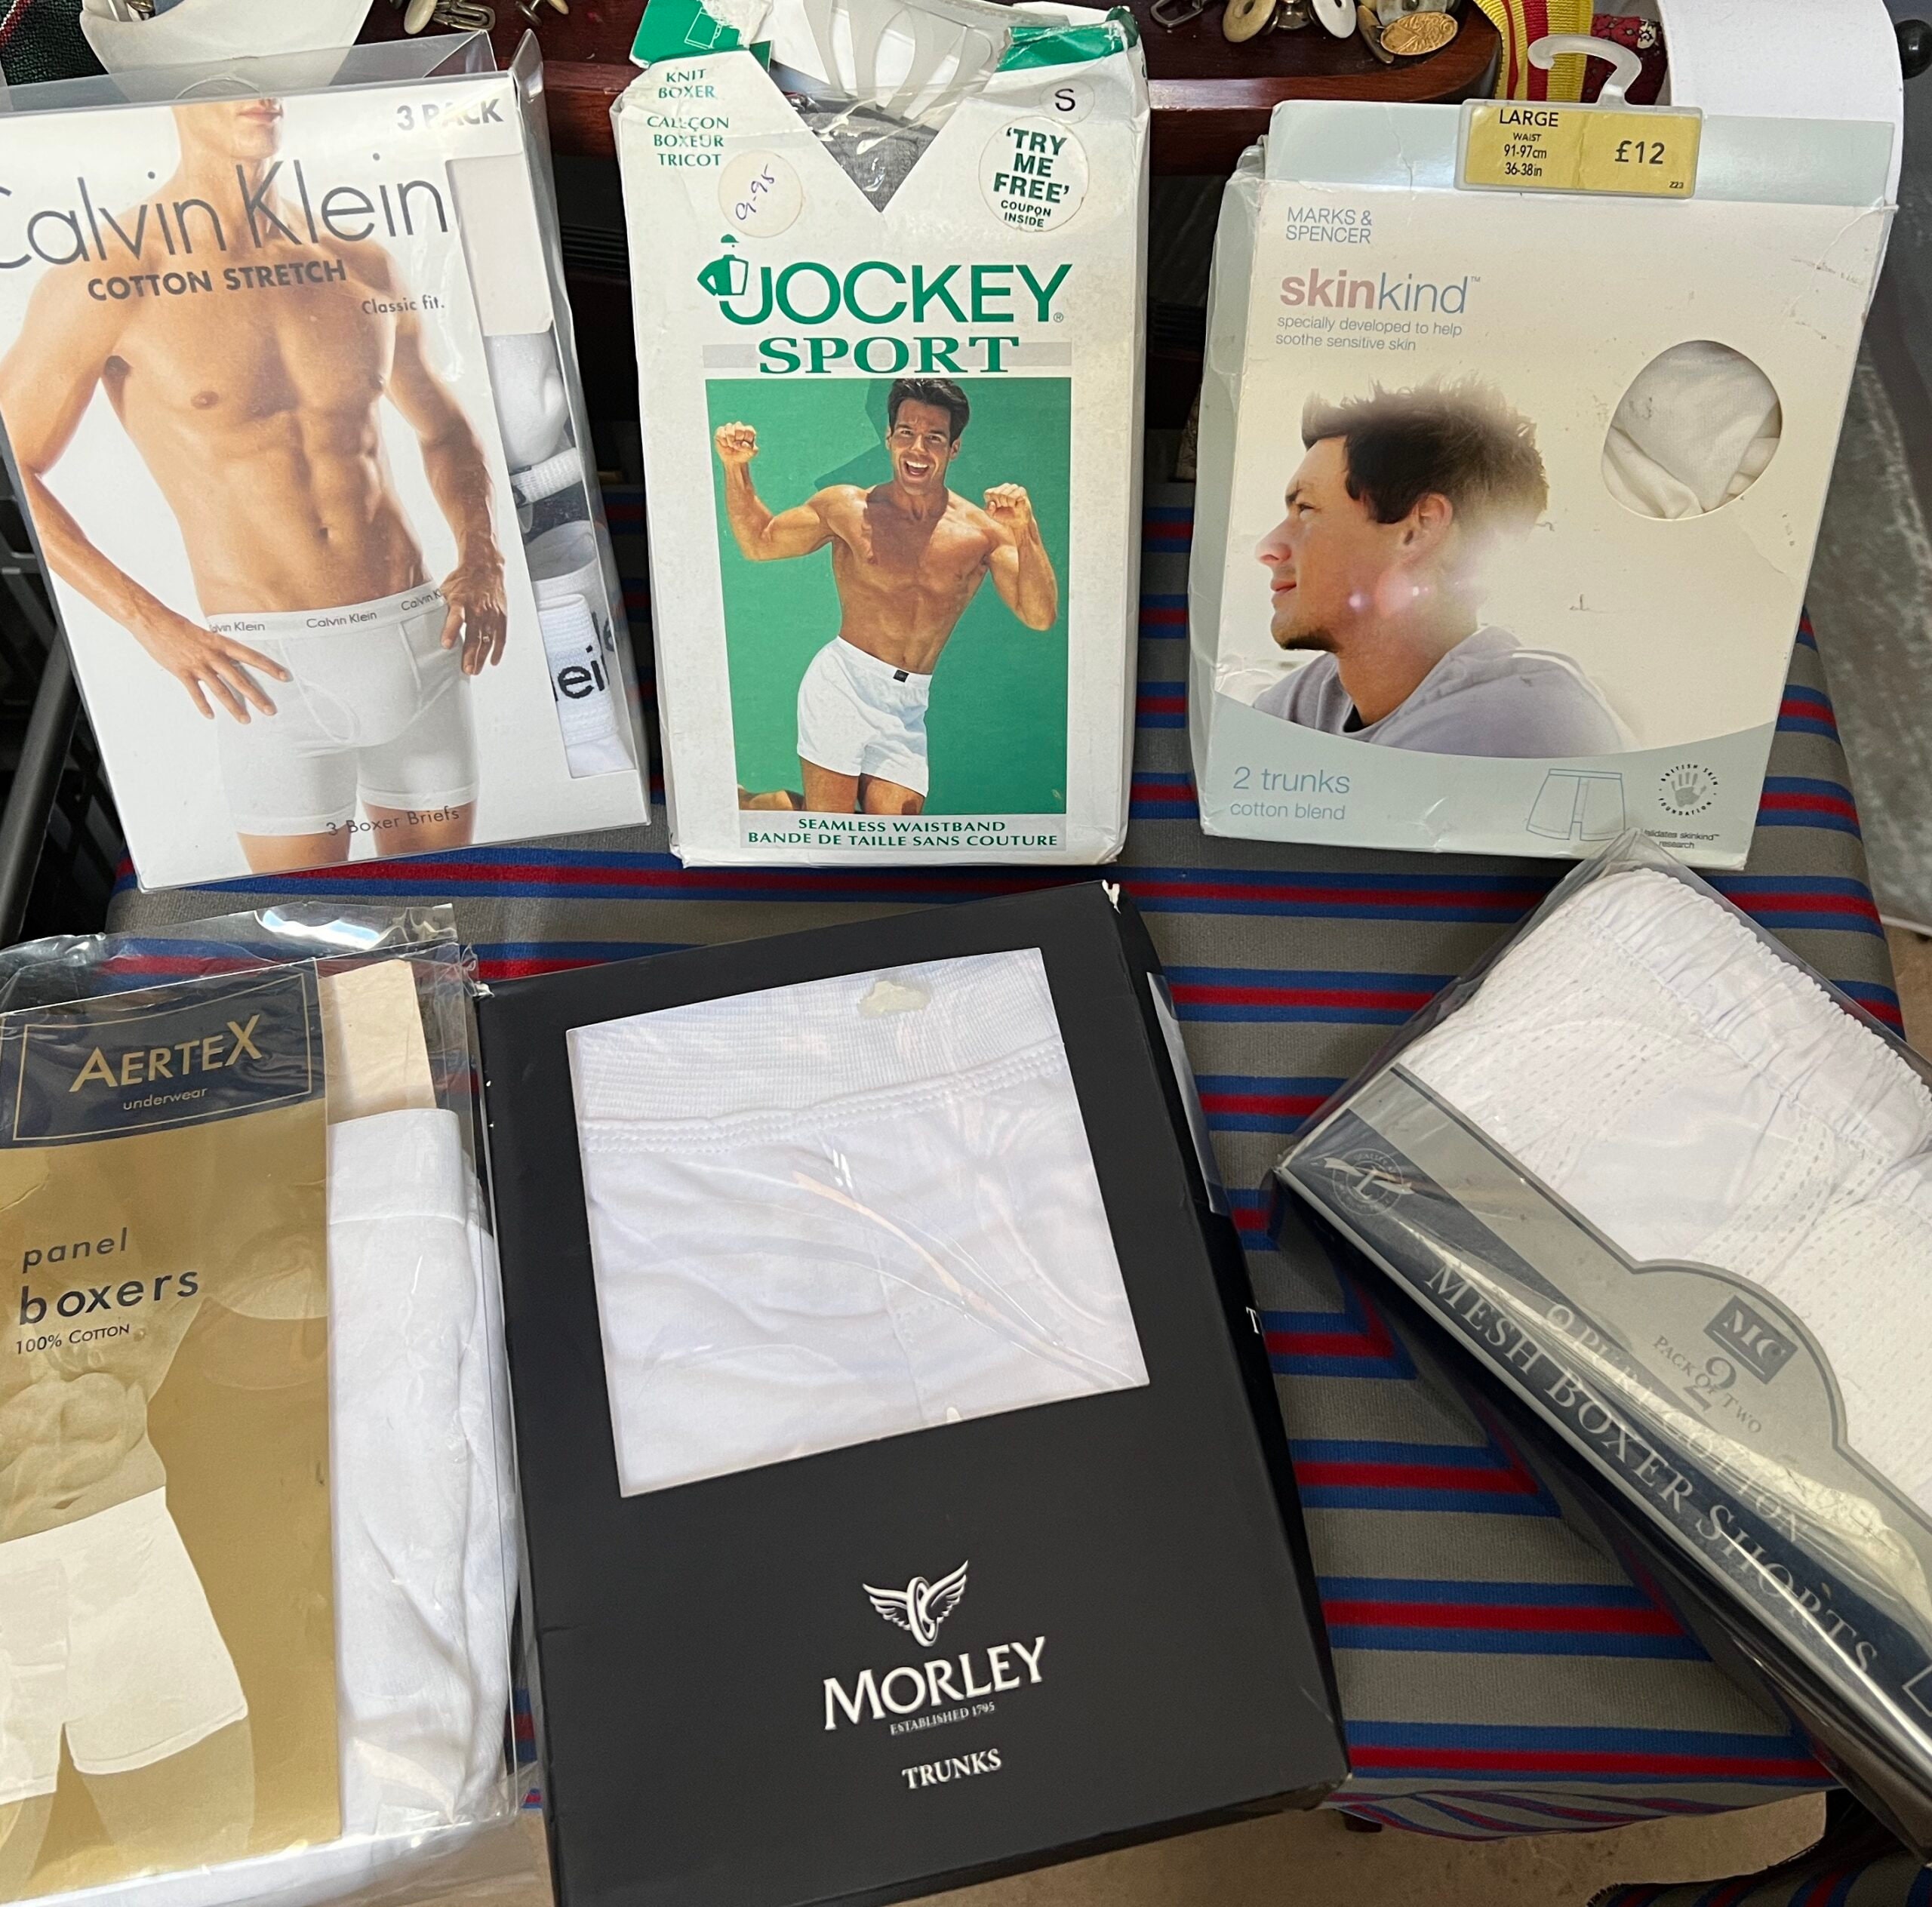 Vintage Jockey nylon tricot briefs size 32 undershorts, 80s new old stock  underwear